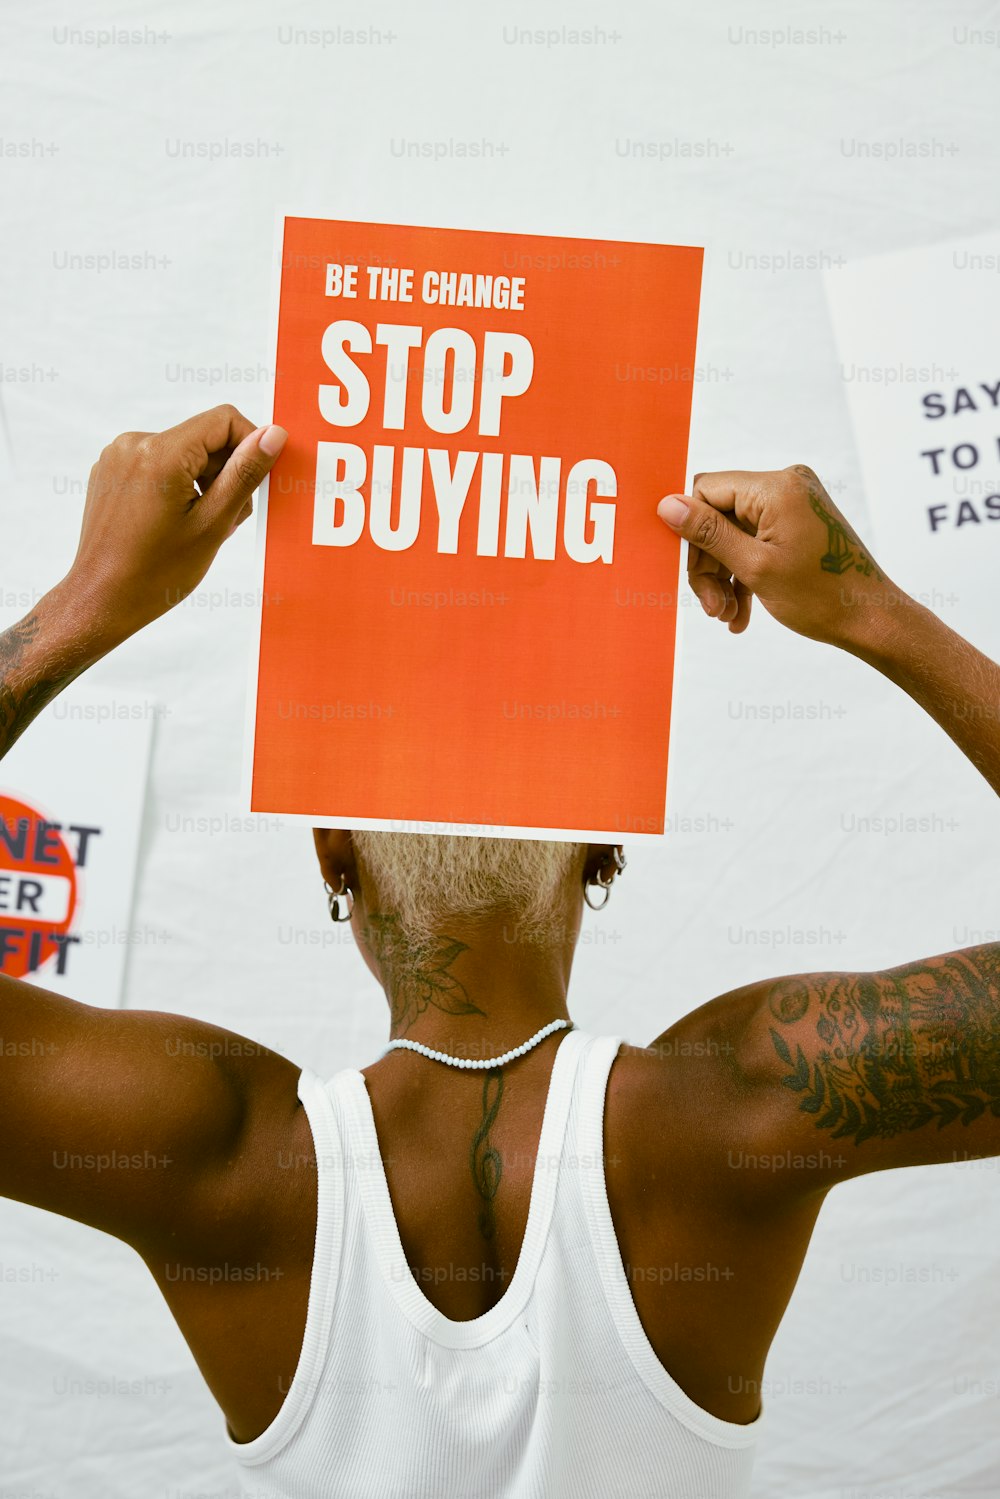 「Be Change to Stop Buy」と書かれた看板を掲げた男性